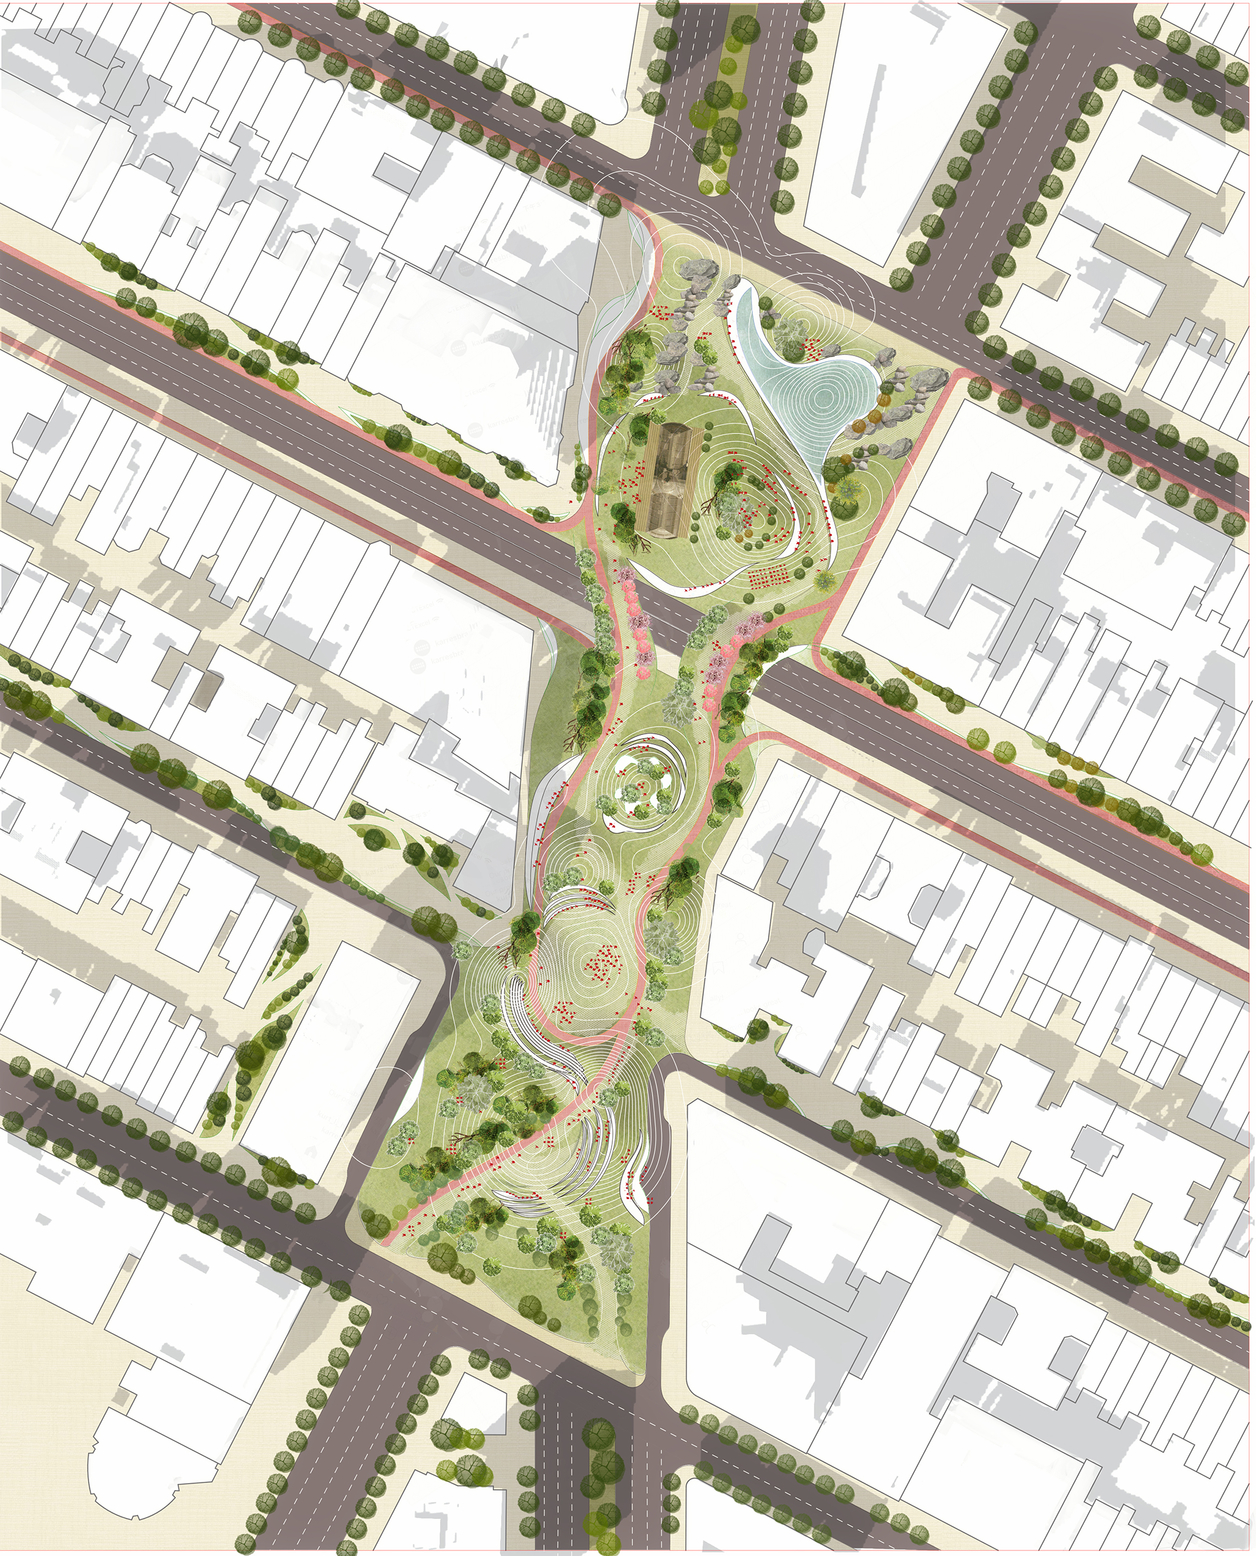 Site plan shows proposal for future broadway street as an pedestrian park.